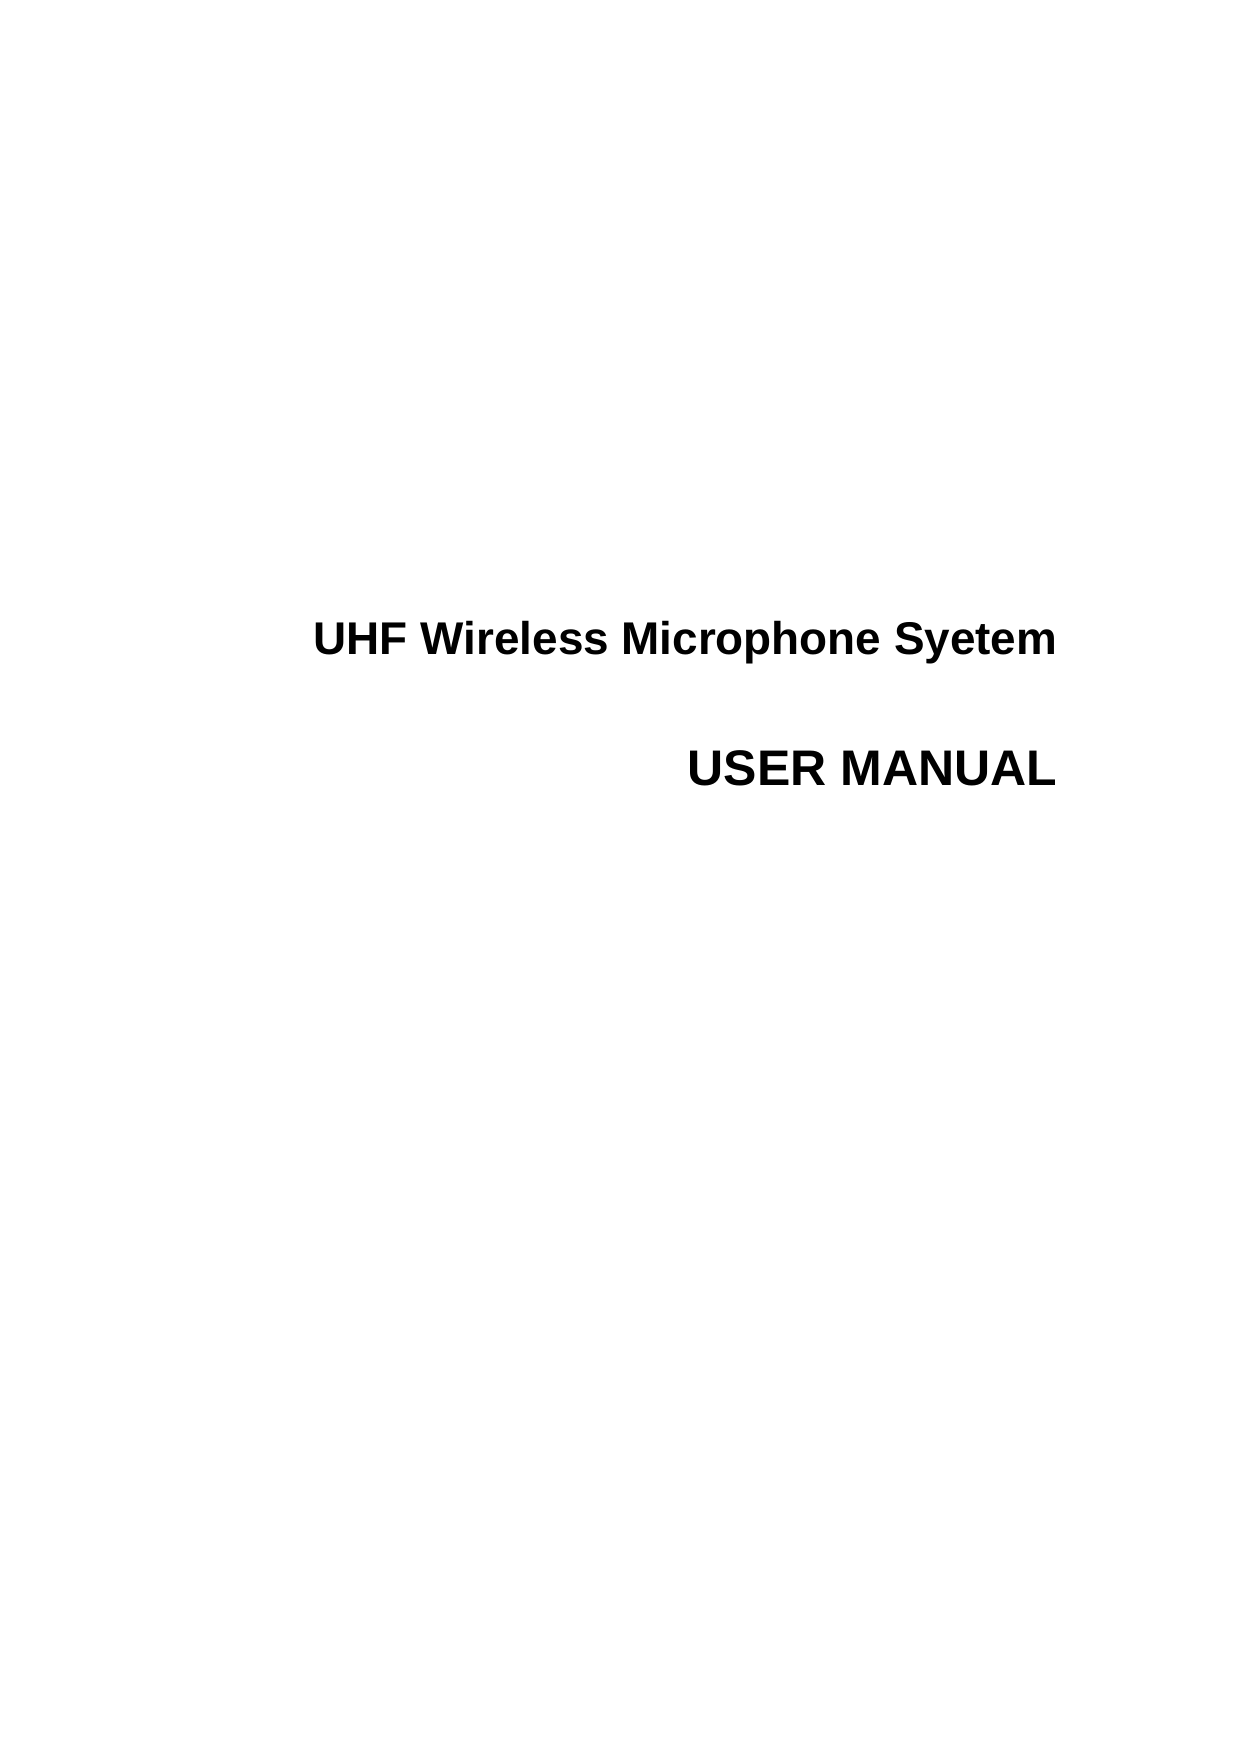               UHF Wireless Microphone Syetem  USER MANUAL                         